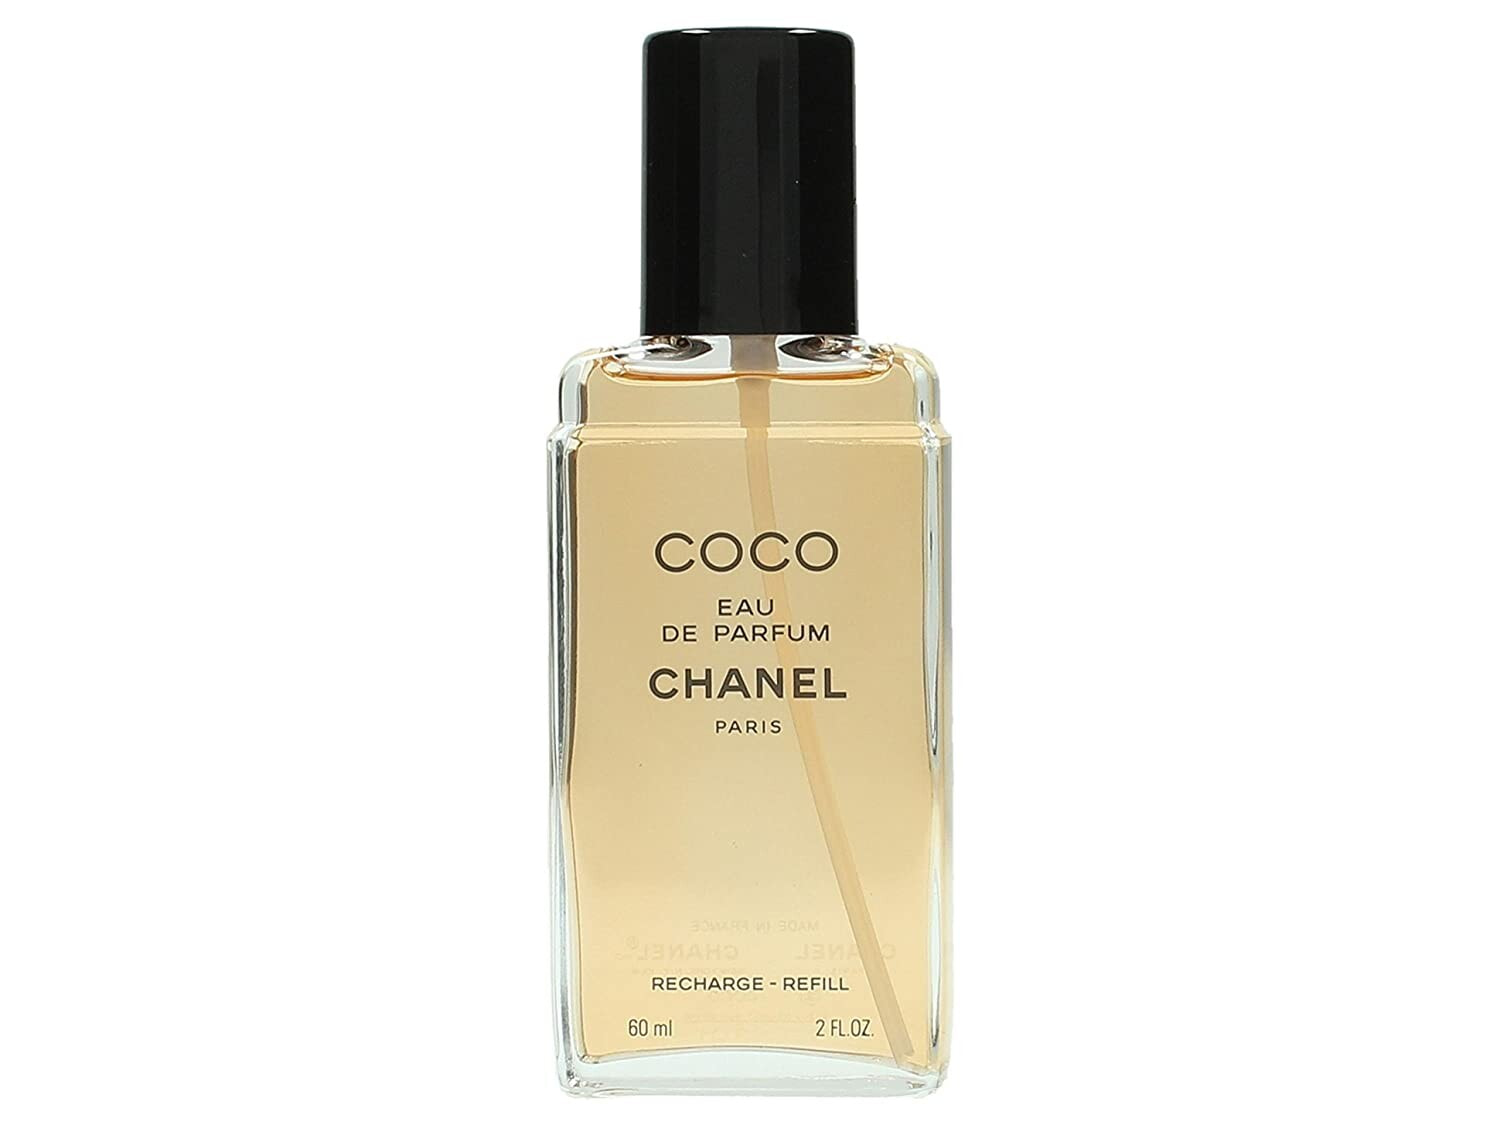 Chanel Coco Eau de Parfum Парфюмерная вода 60 мл. Сменный блок